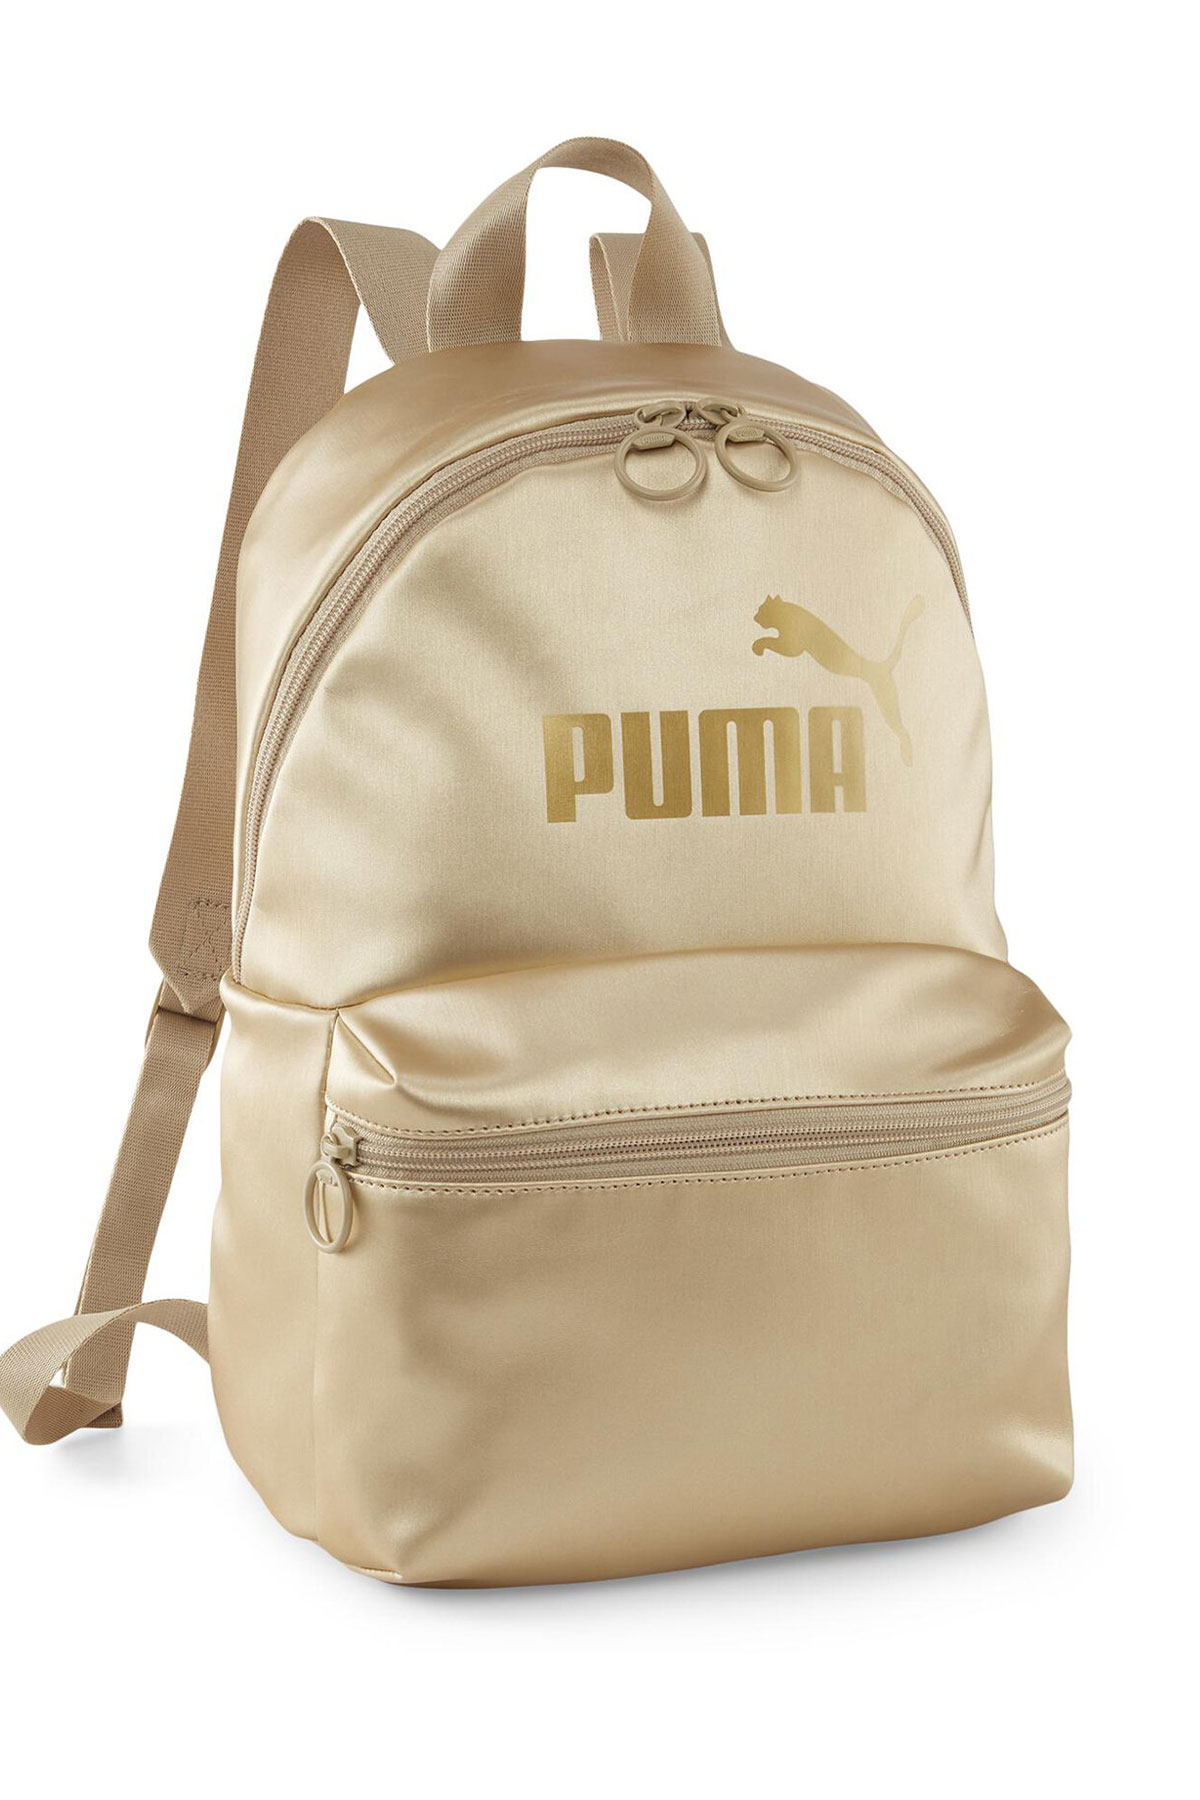 Puma Core Up Kadın Gold Sırt Çantası